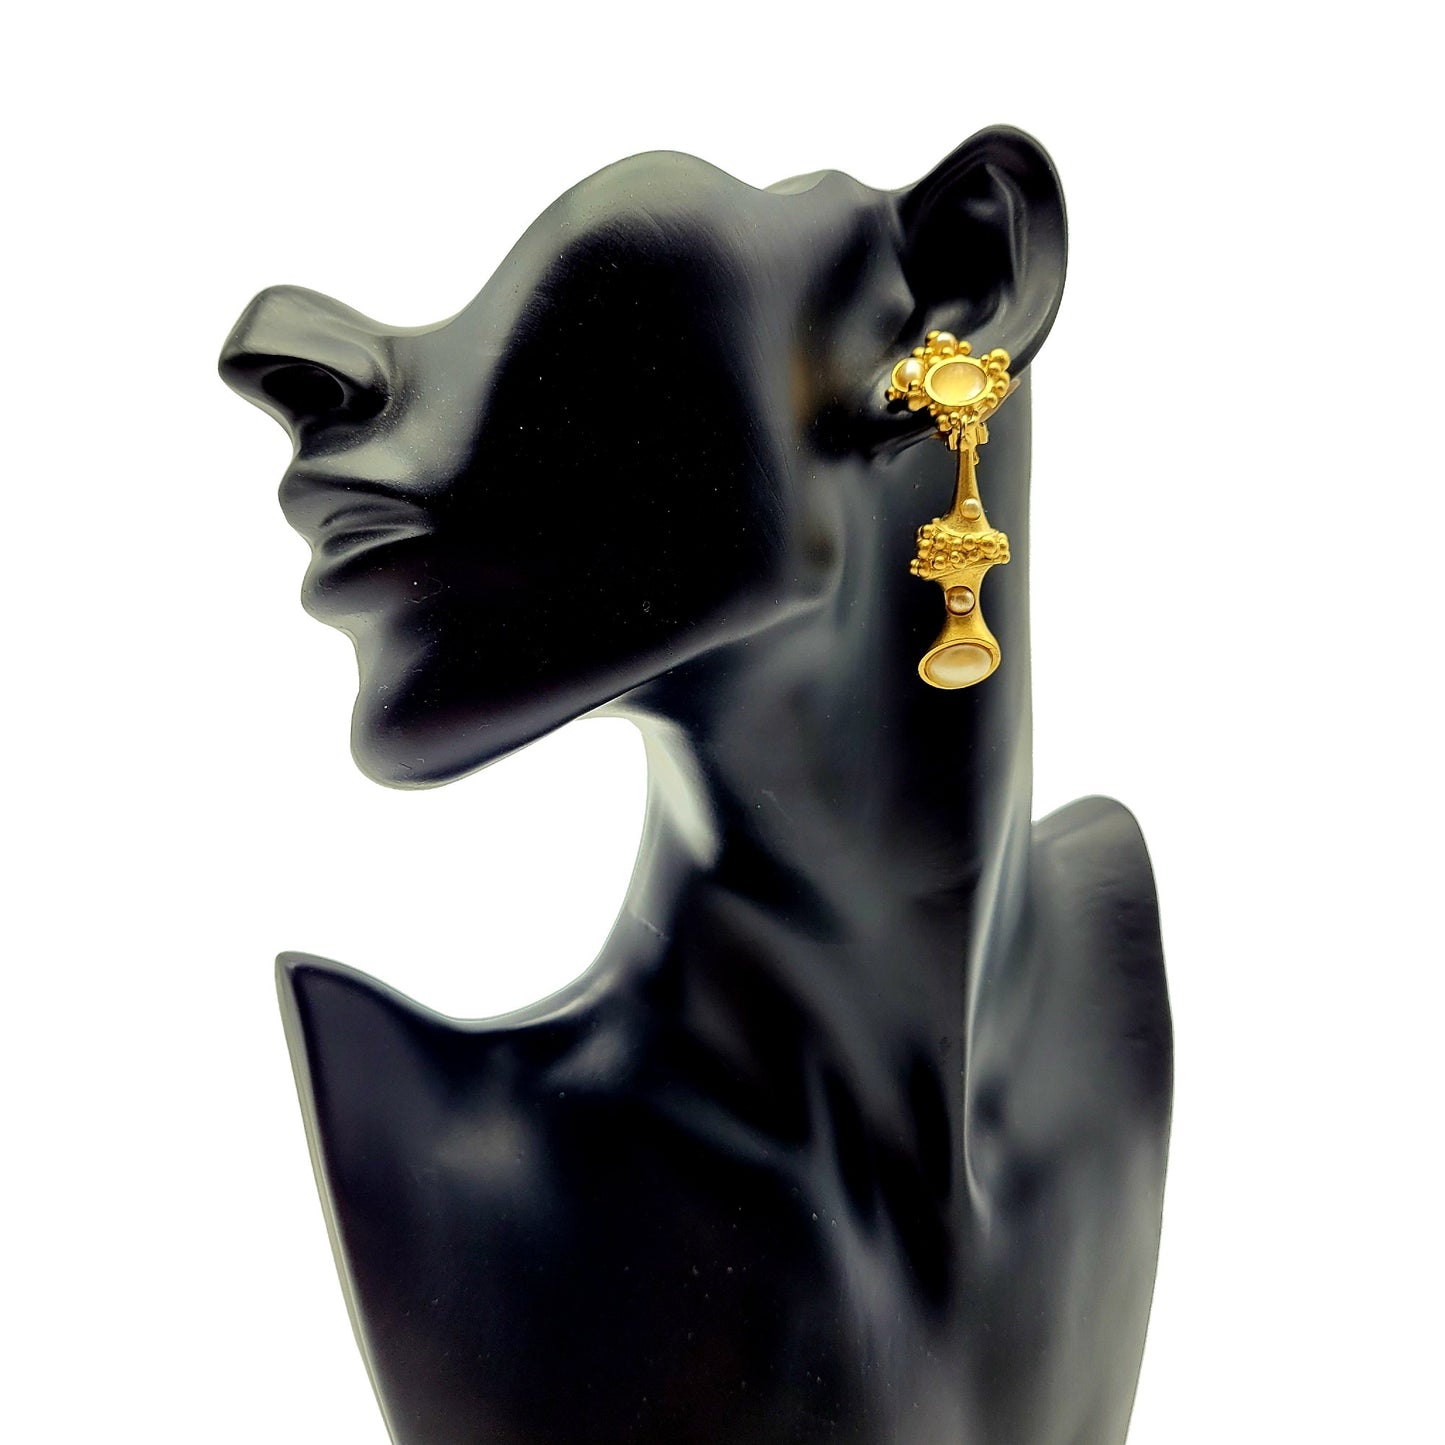 Vintage dangle earrings Christian Lacroix